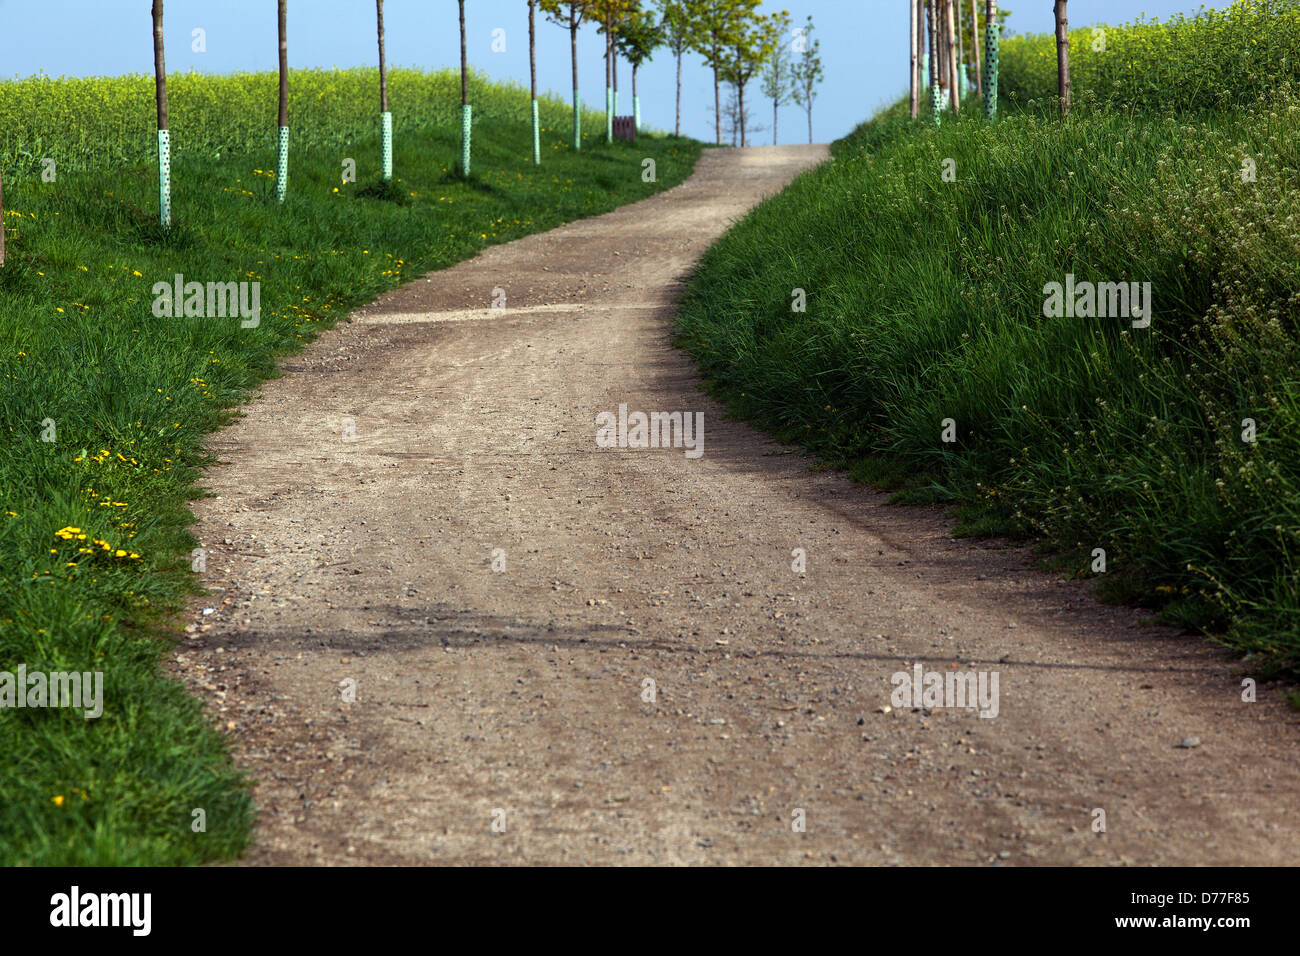 The rural road leading between grass field Czech Republic Europe Stock Photo